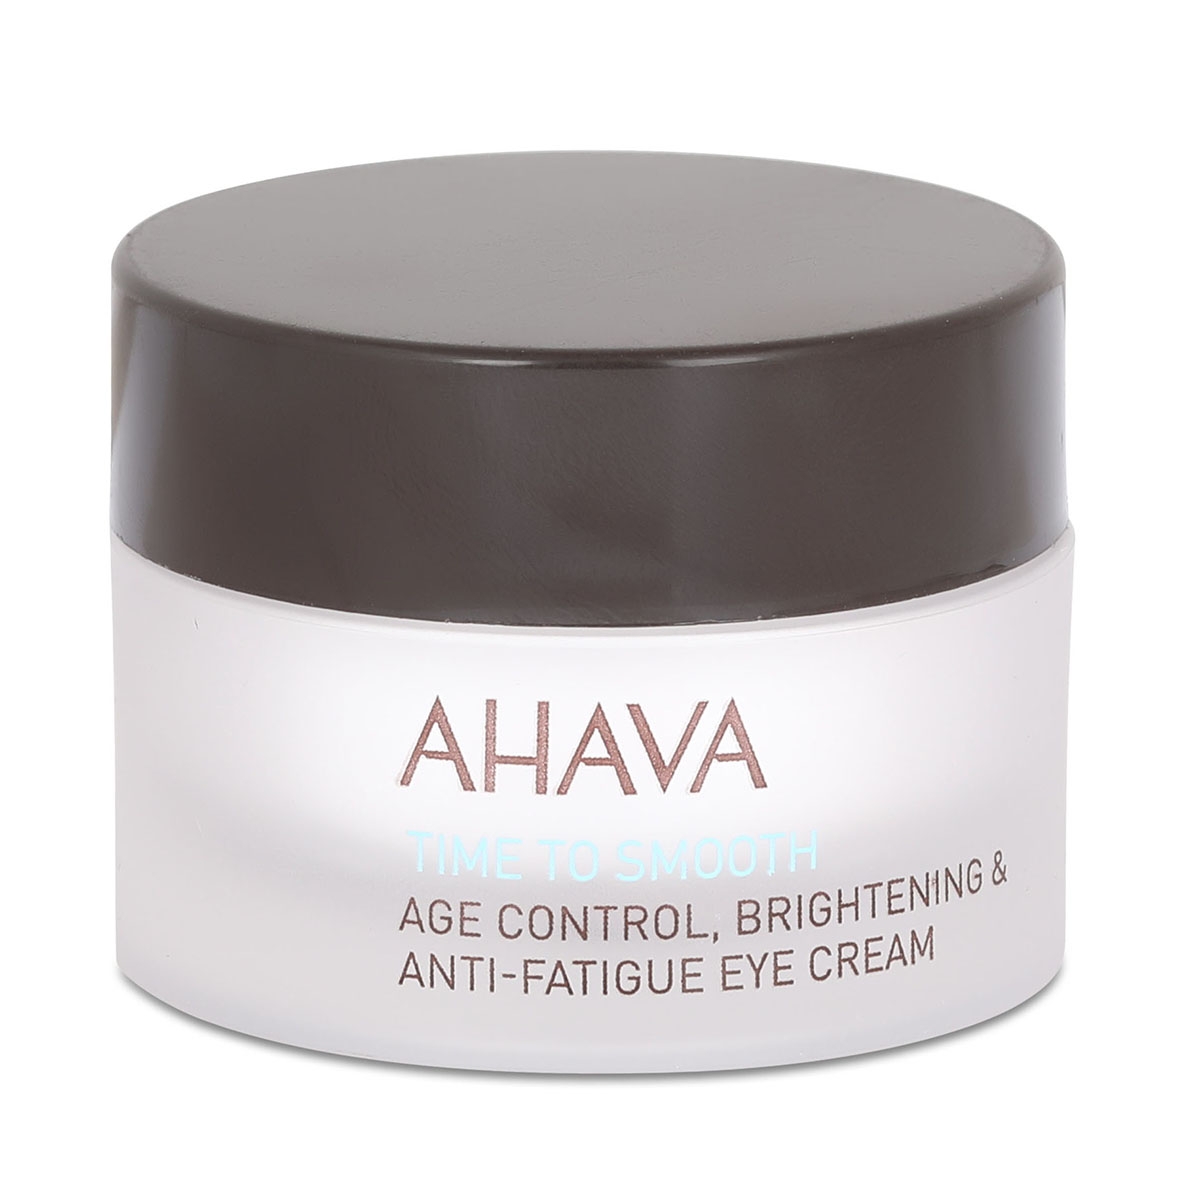 AHAVA Age Control Brightening & Anti-Fatigue Eye Cream - 1